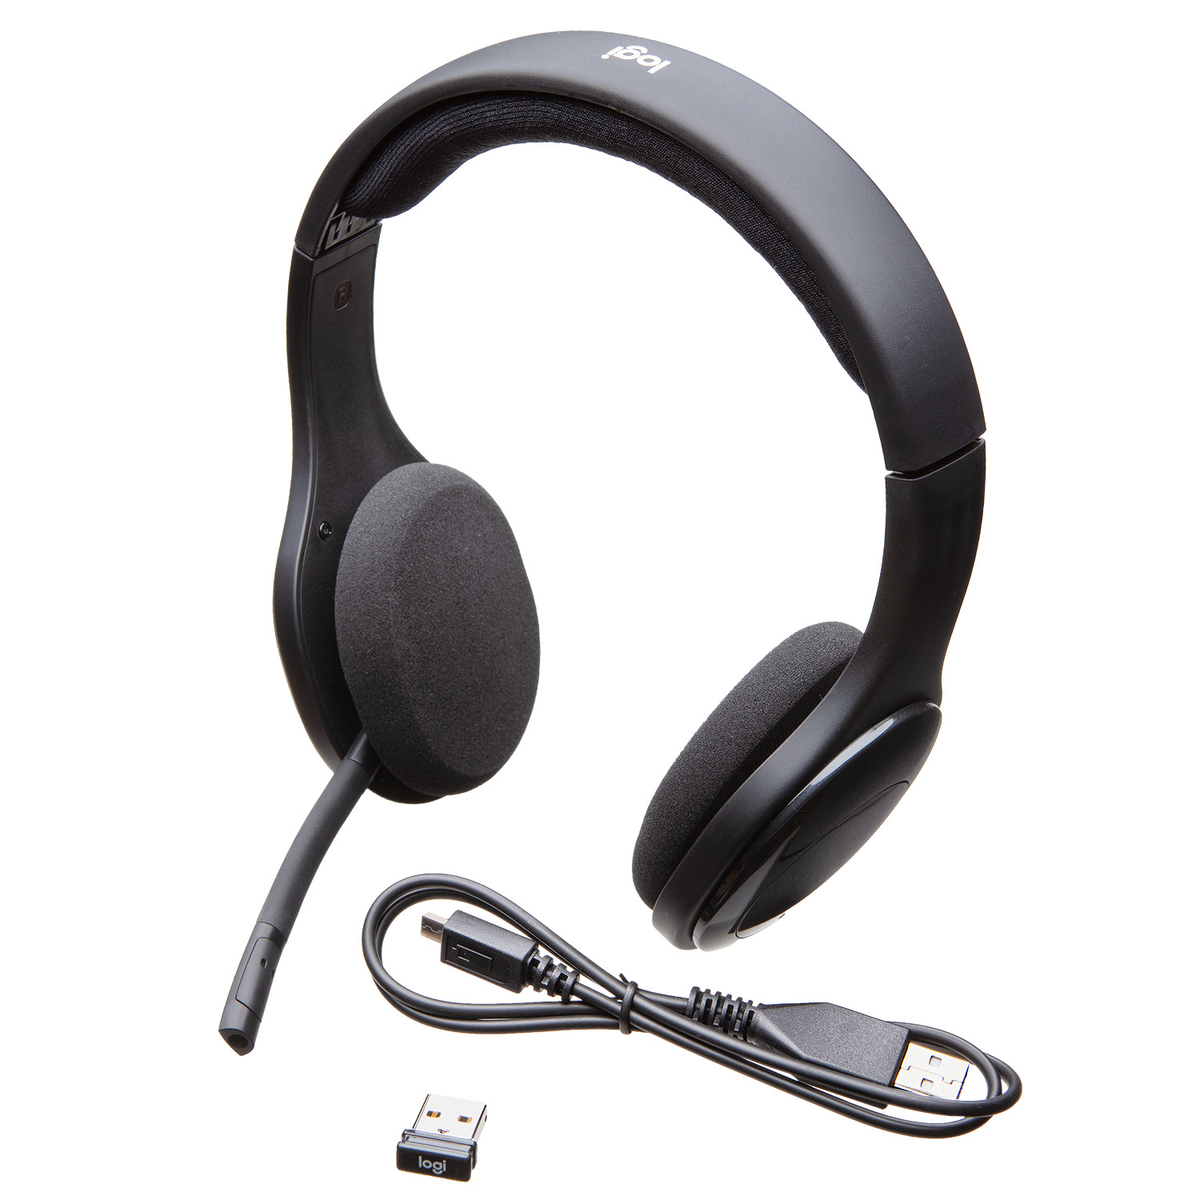 Bluetooth LOGITECH WL H800, Schwarz 981-000338 Headset On-ear